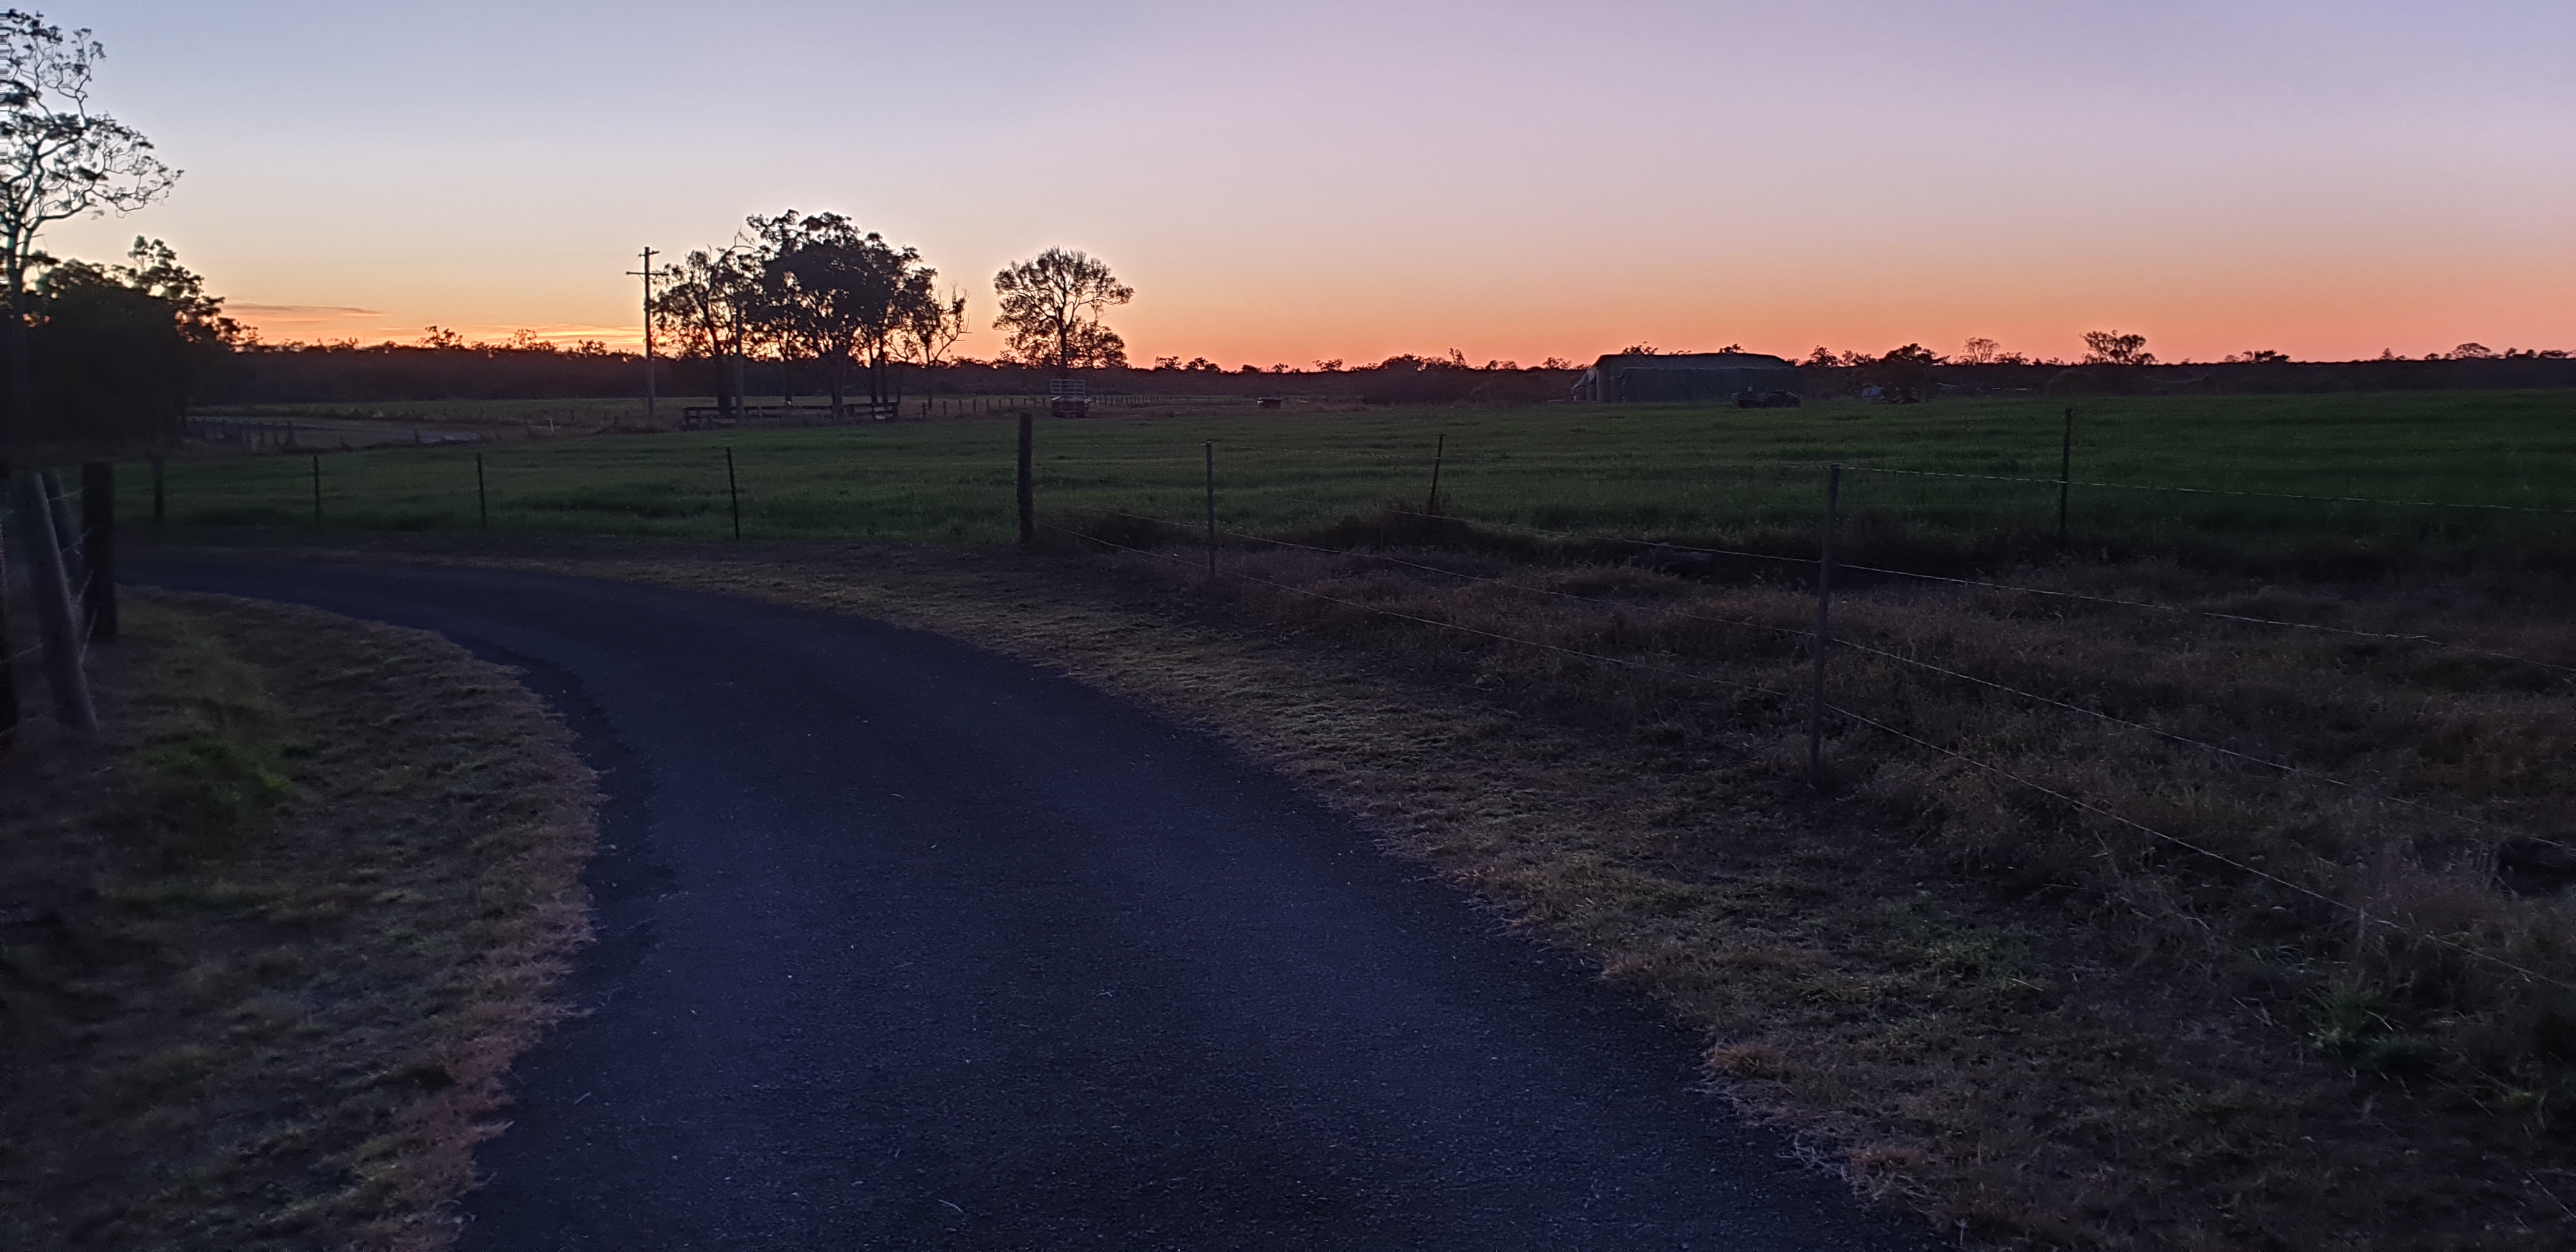 the road ahead at dusk